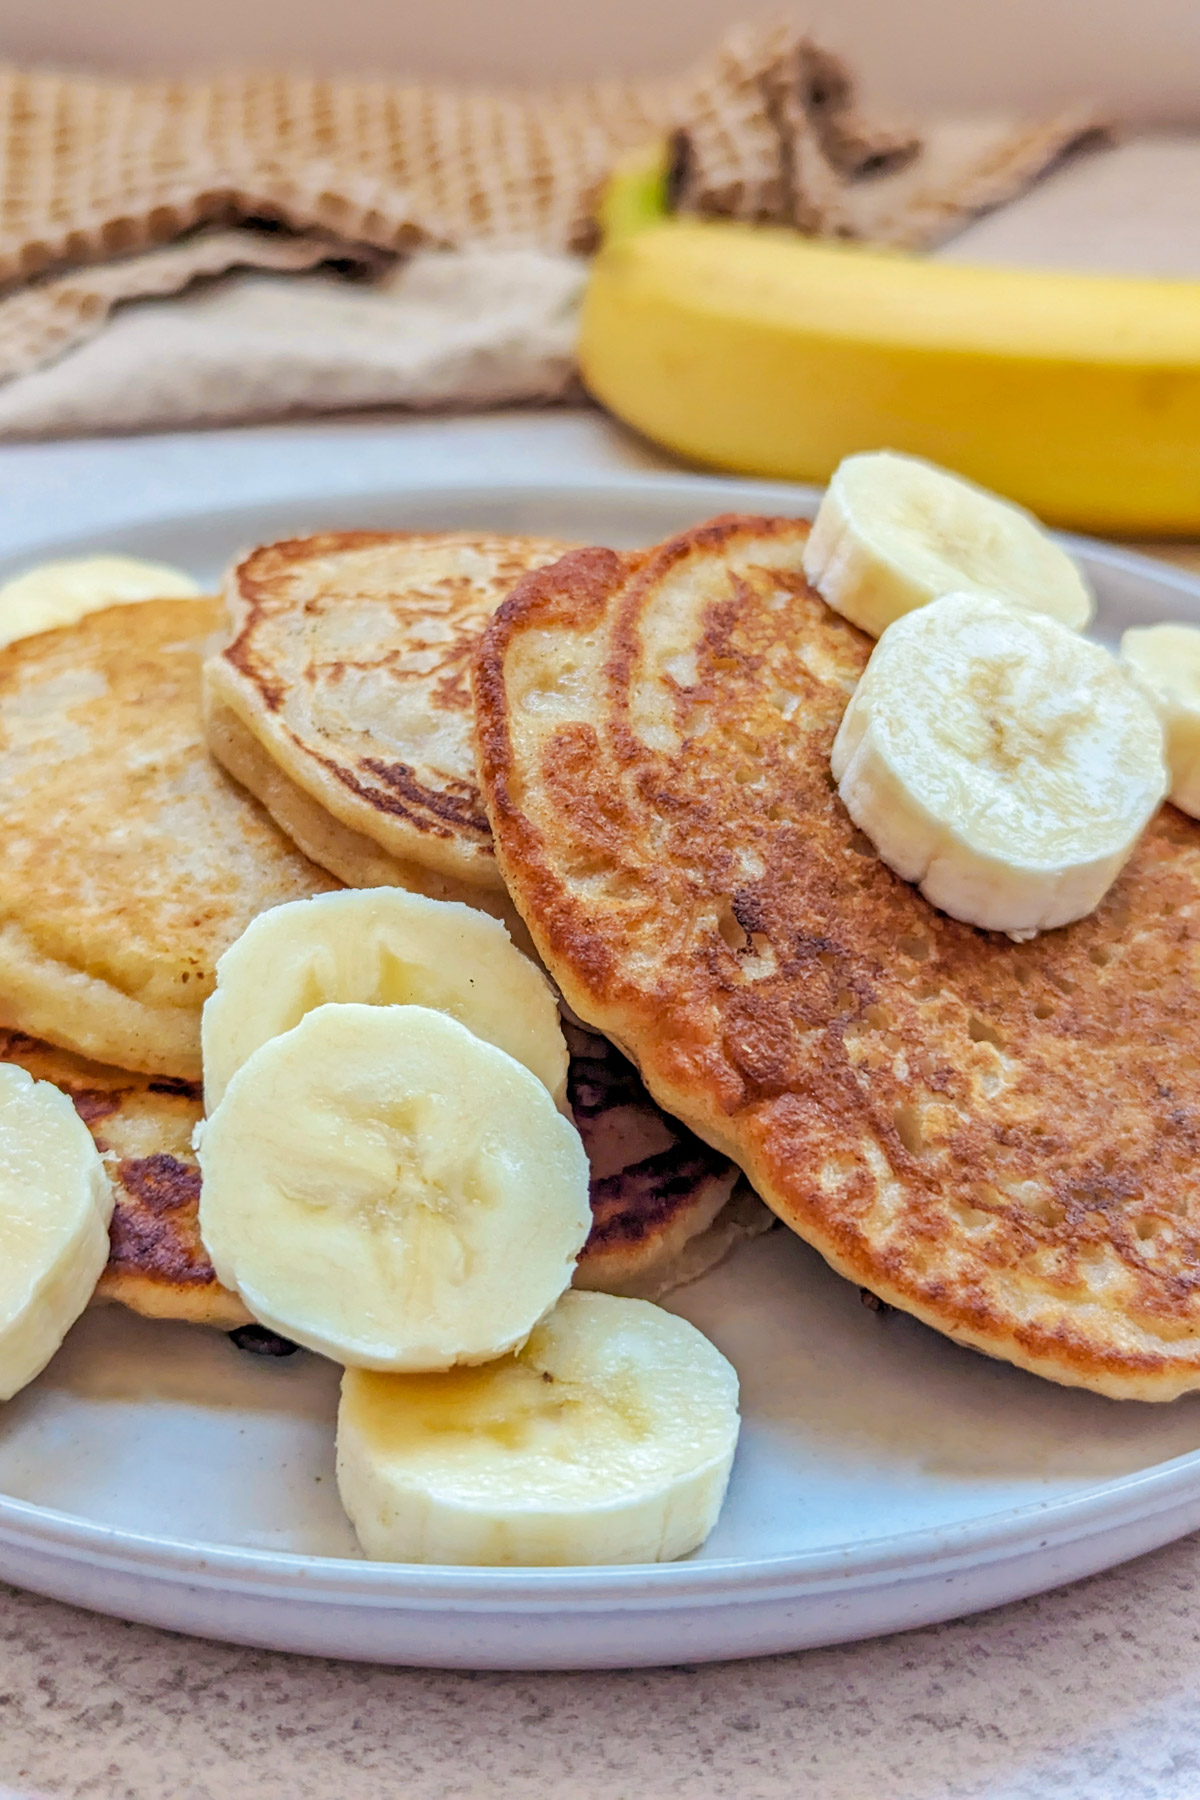 Sourdough banana pancakes with syrup and banana slices. 